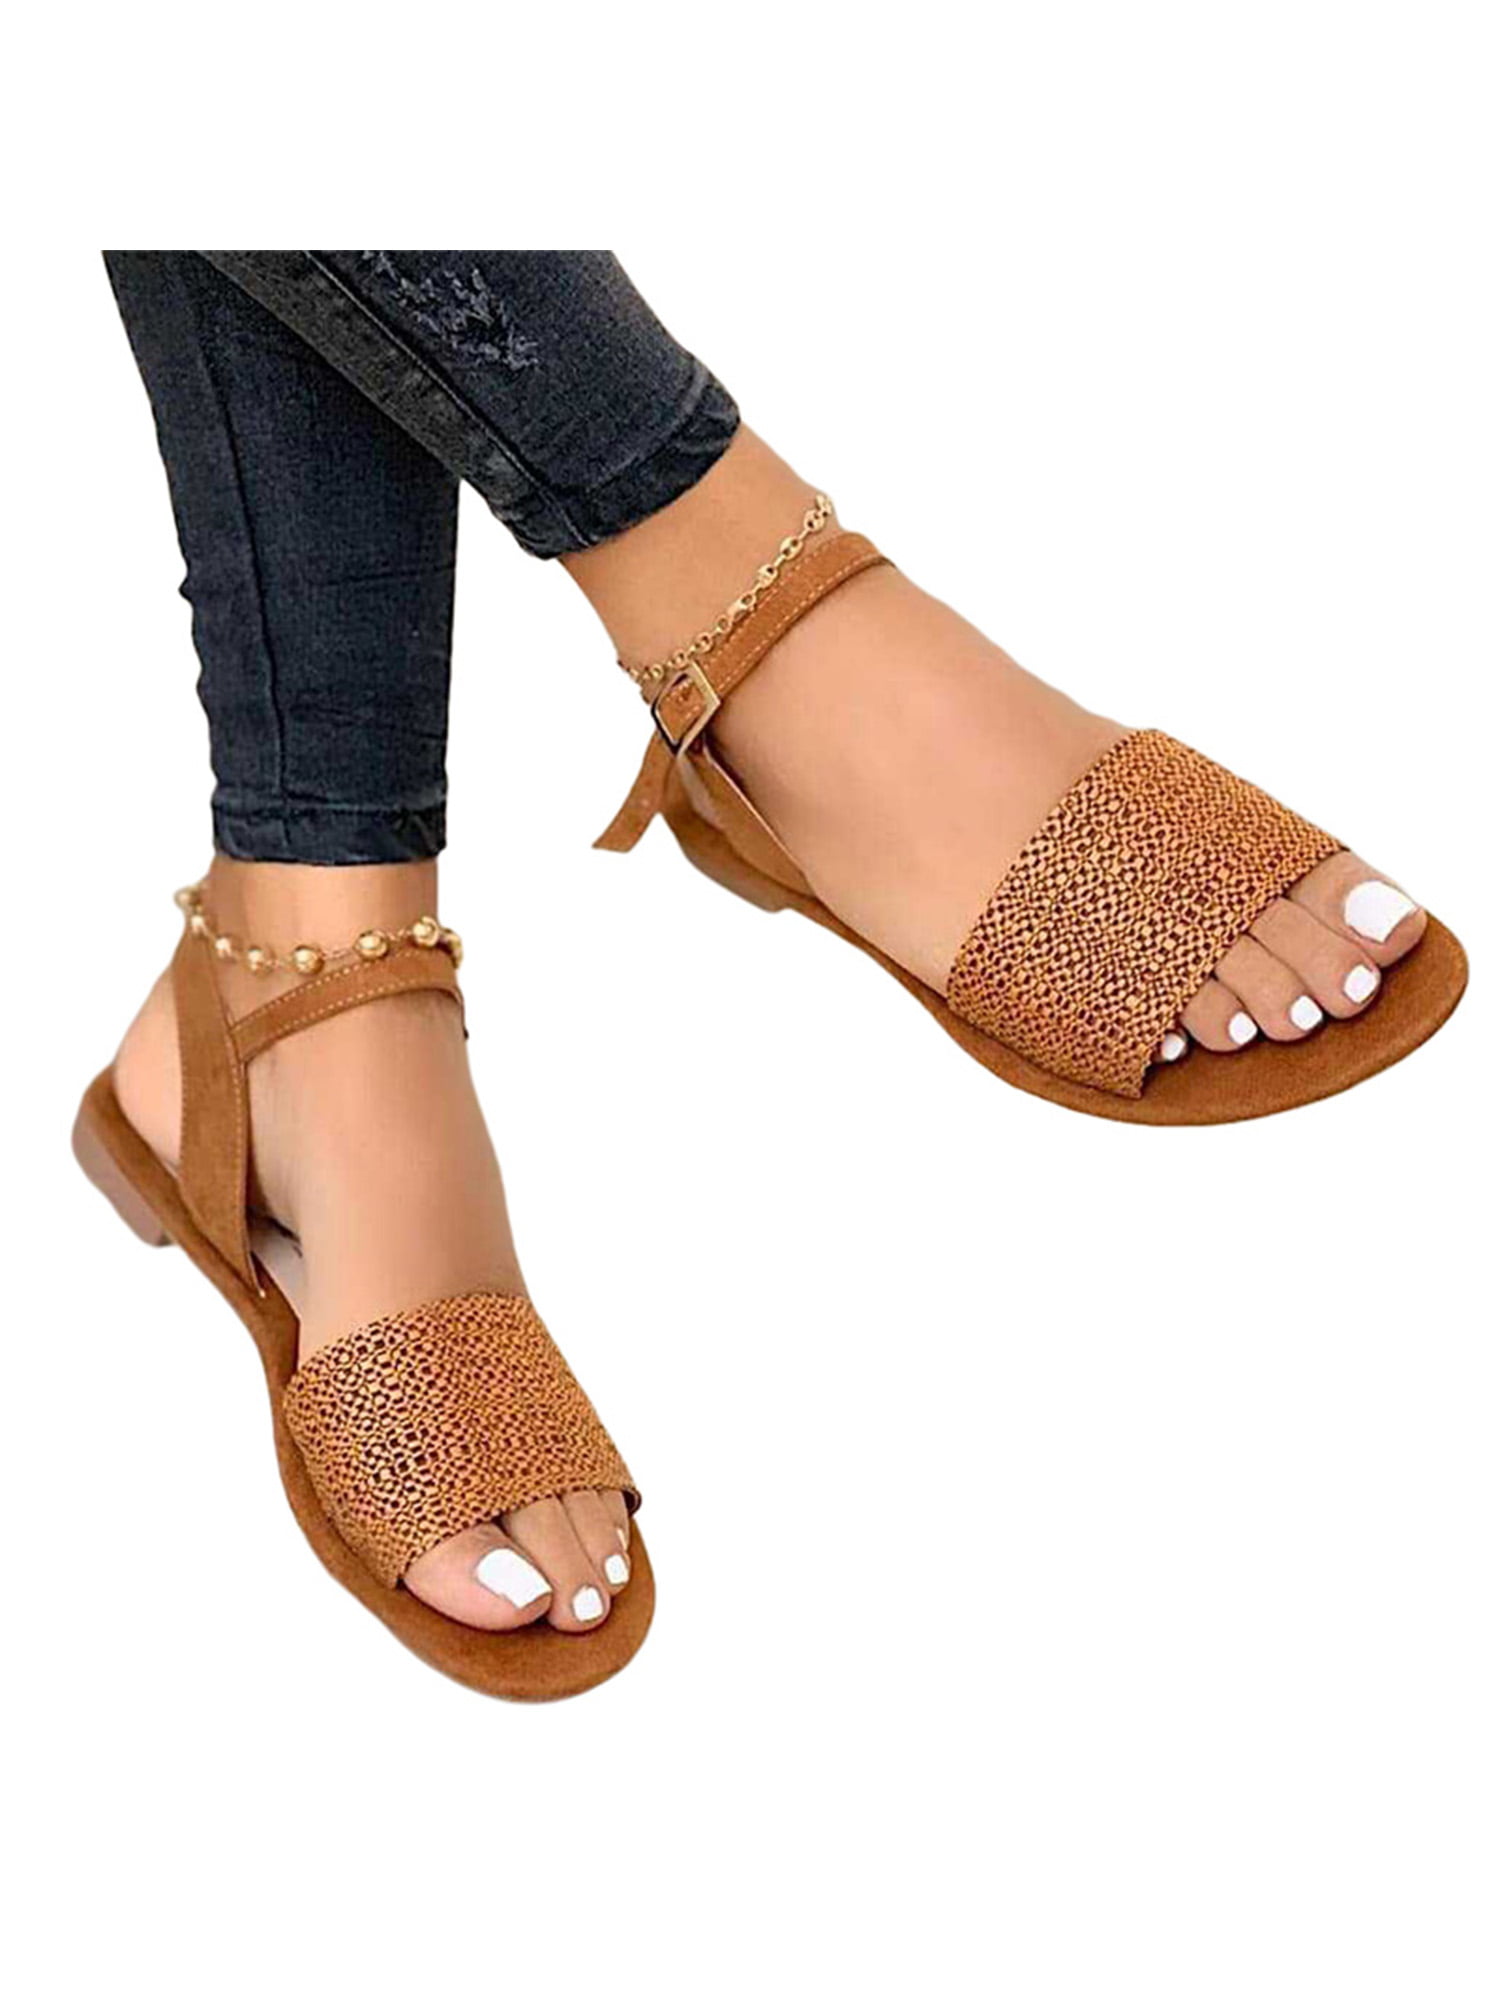 ❤️Women Rhinestone Buckle Slippers Slip On Slider Flat Sandals Summer Shoes Size 